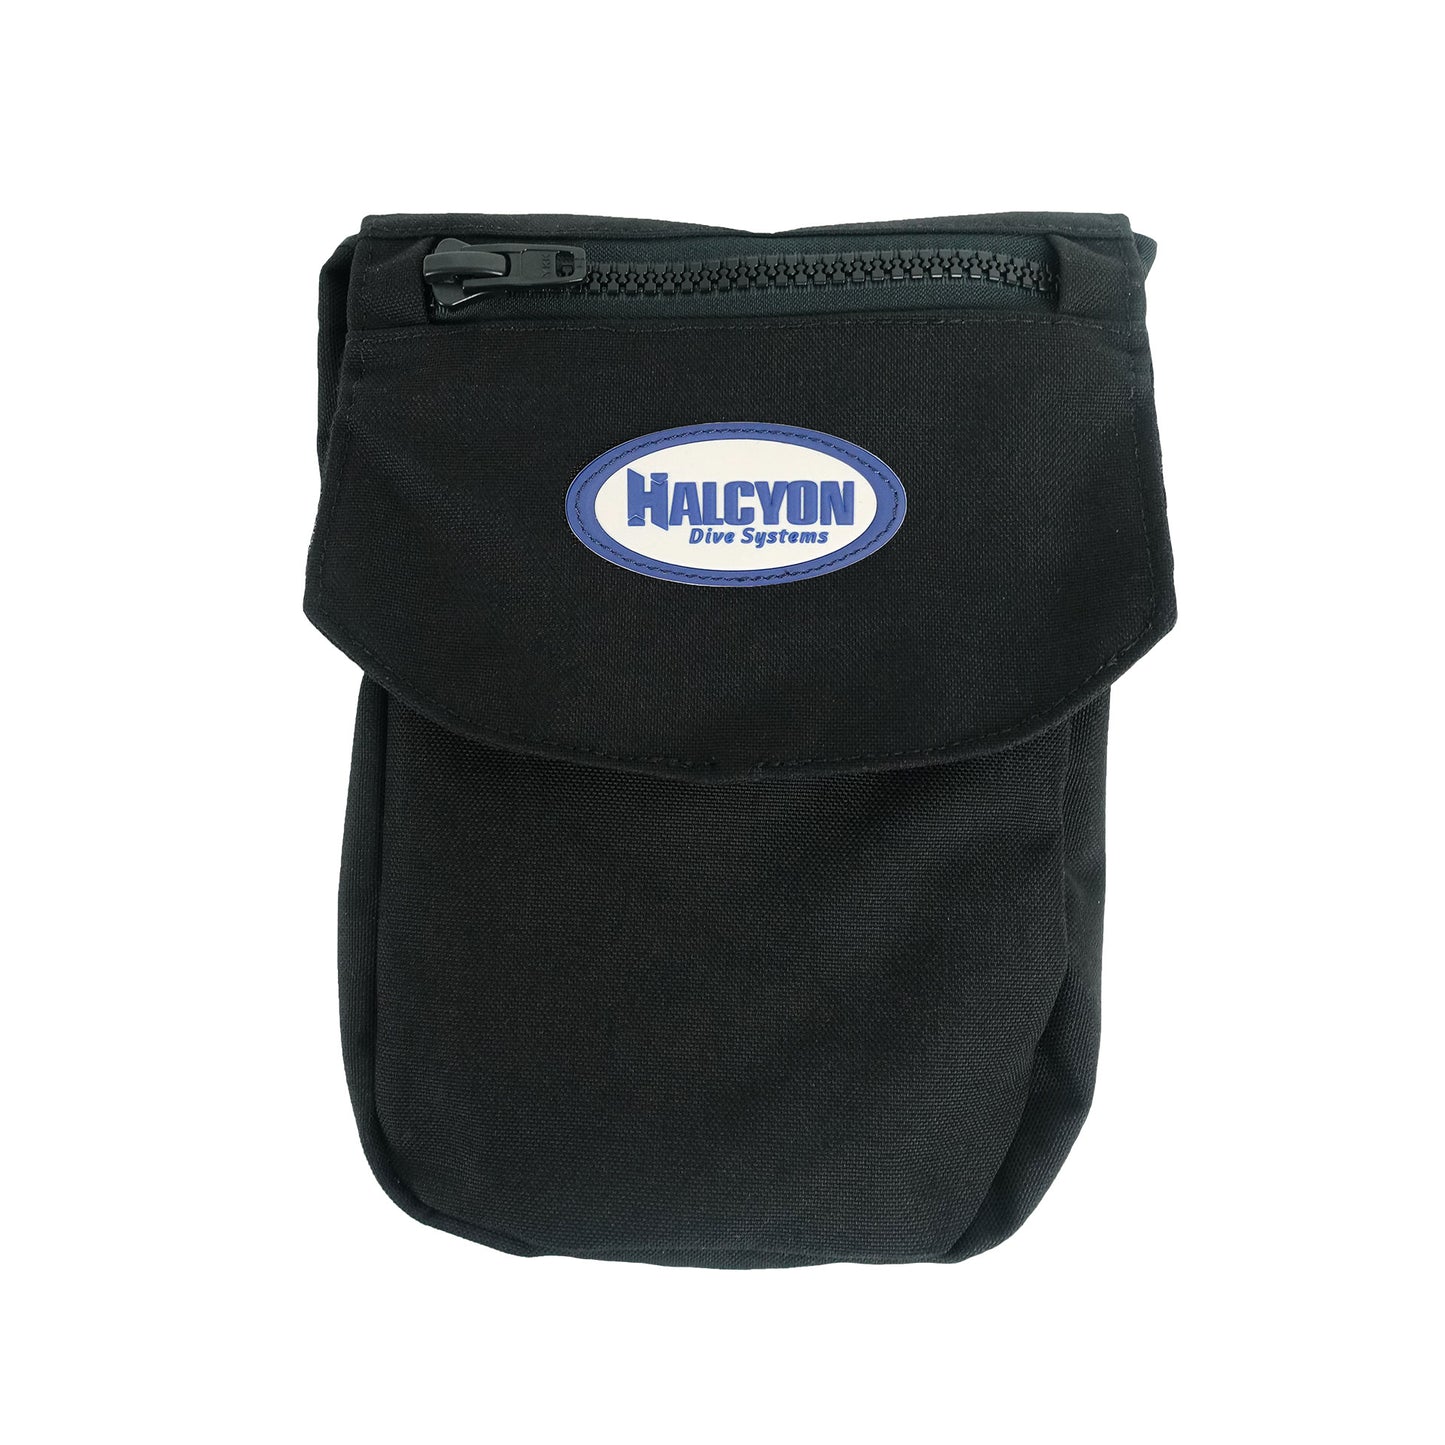 Halcyon Suit Pockets for Drysuit or Wetsuit - Standard or Exploration Bellows